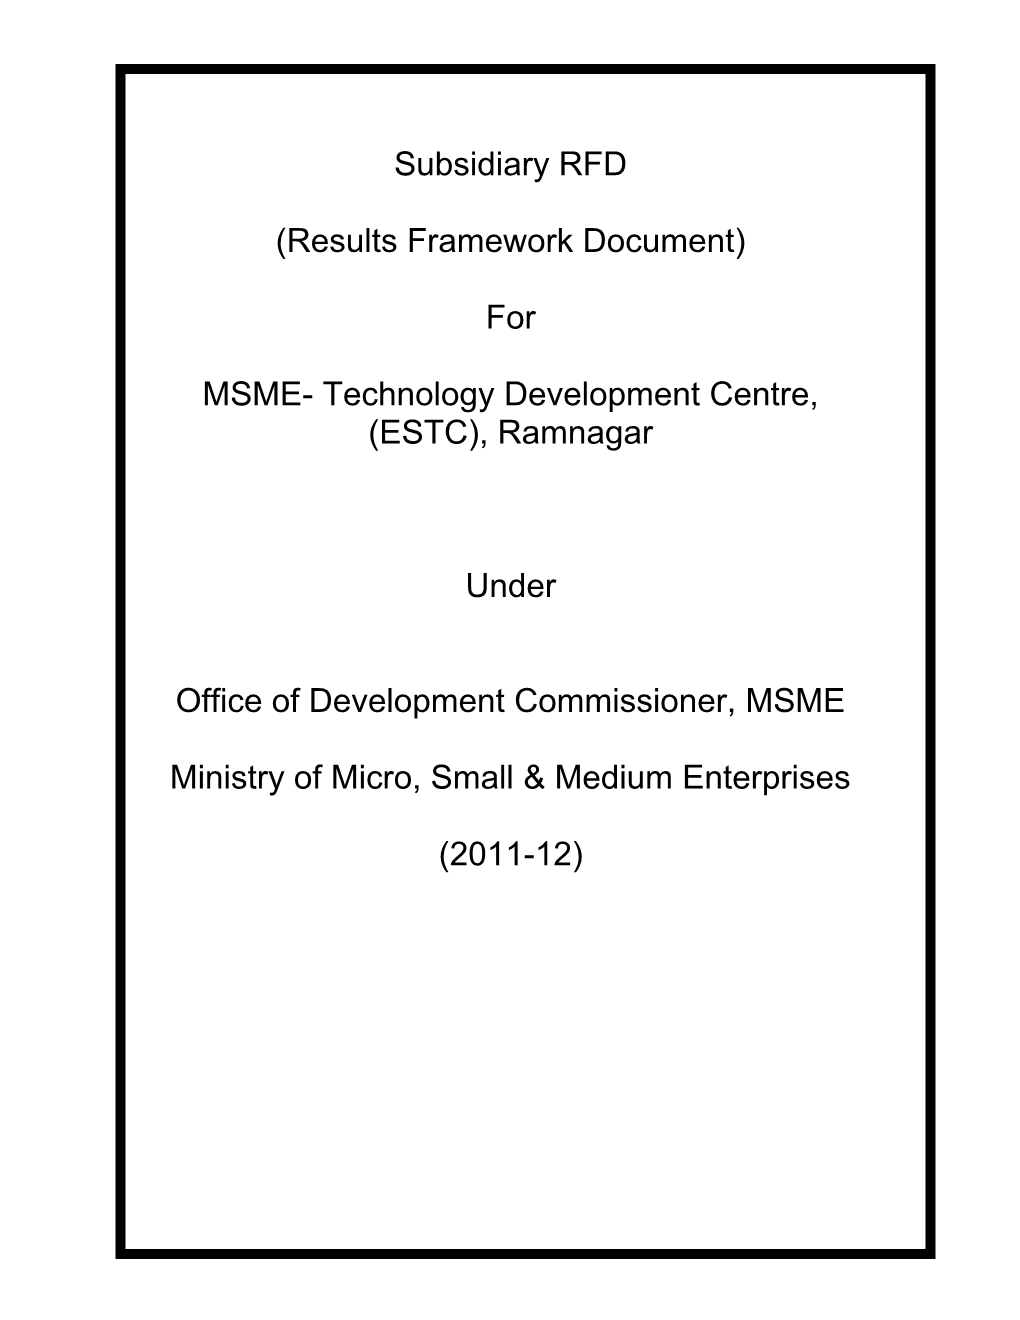 MSME- Technology Development Centre, (ESTC), Ramnagar